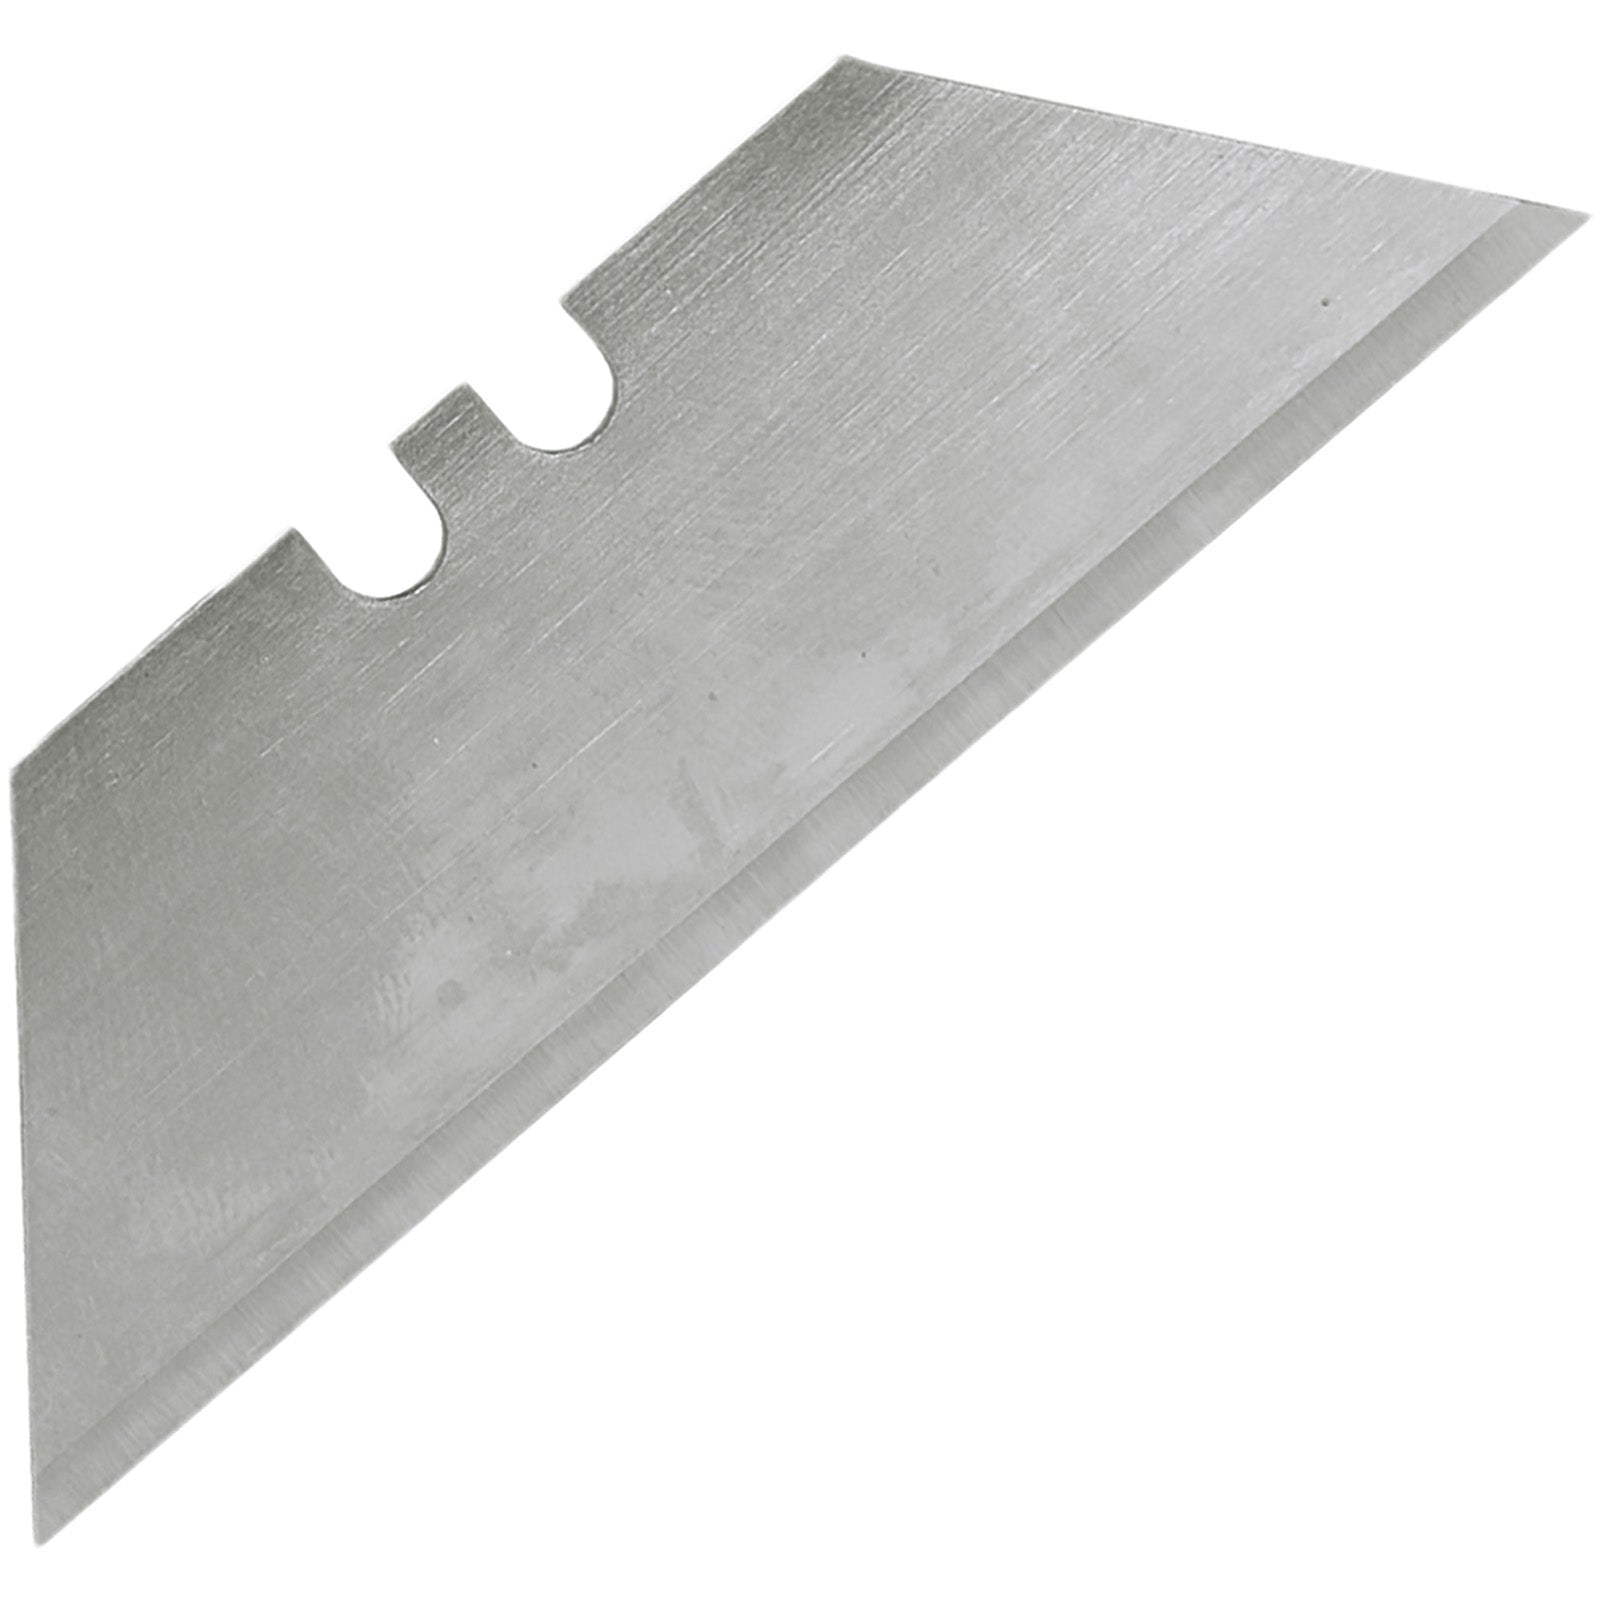 Silverline - Utility Knife Blades 0.6Mm 100pk